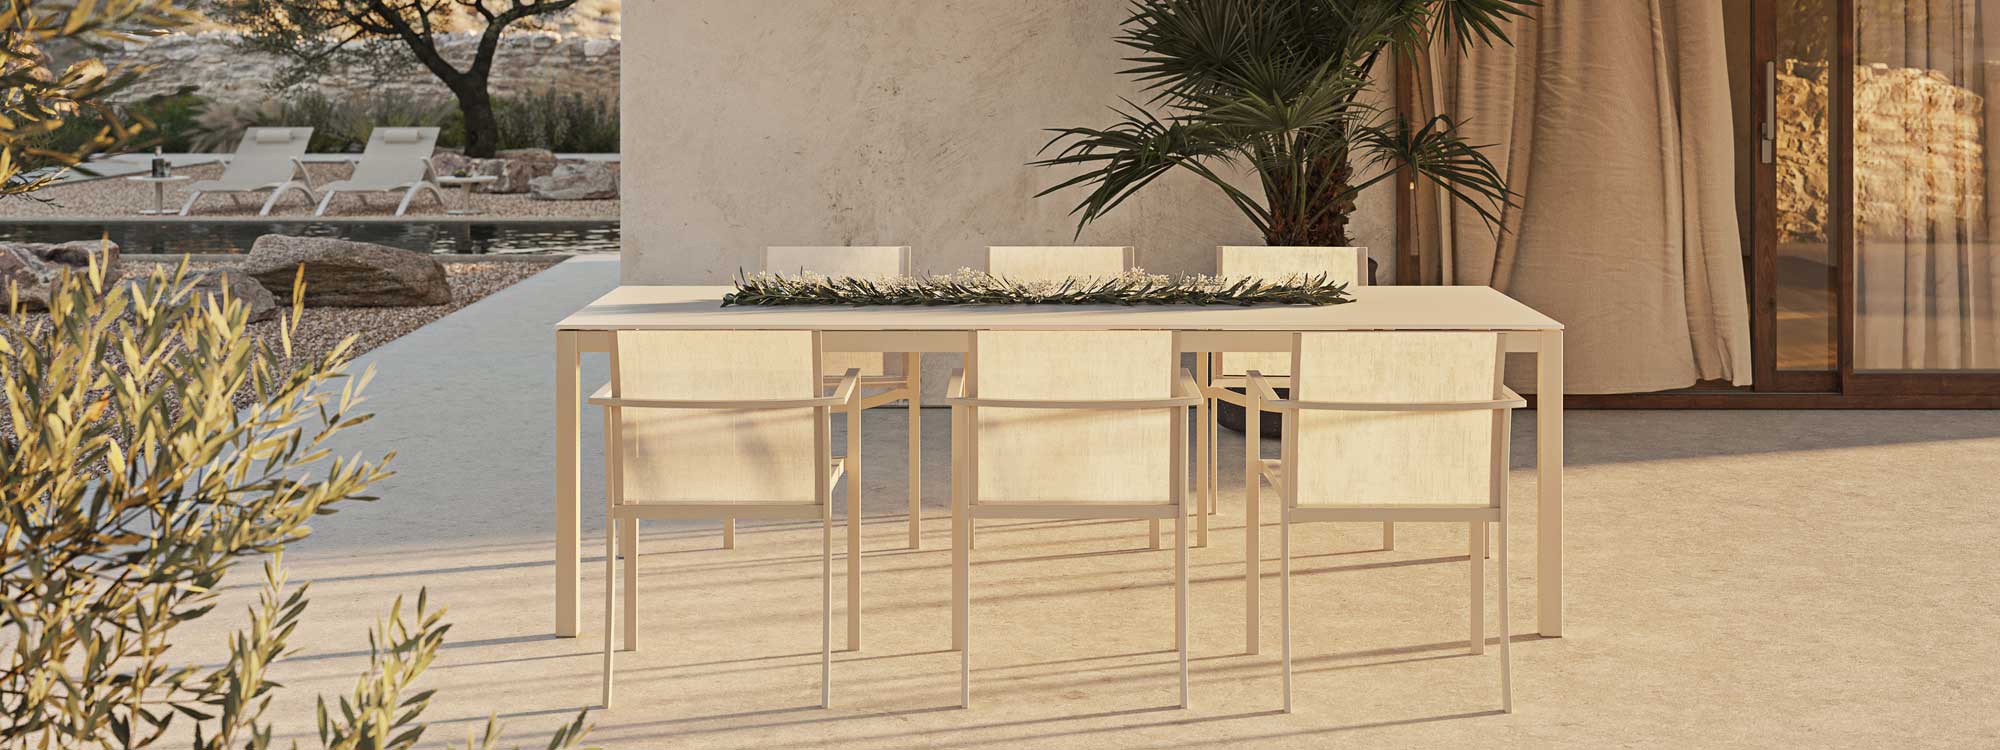 Image of Taboela white garden dining table and OZON white garden chairs by Royal Botania